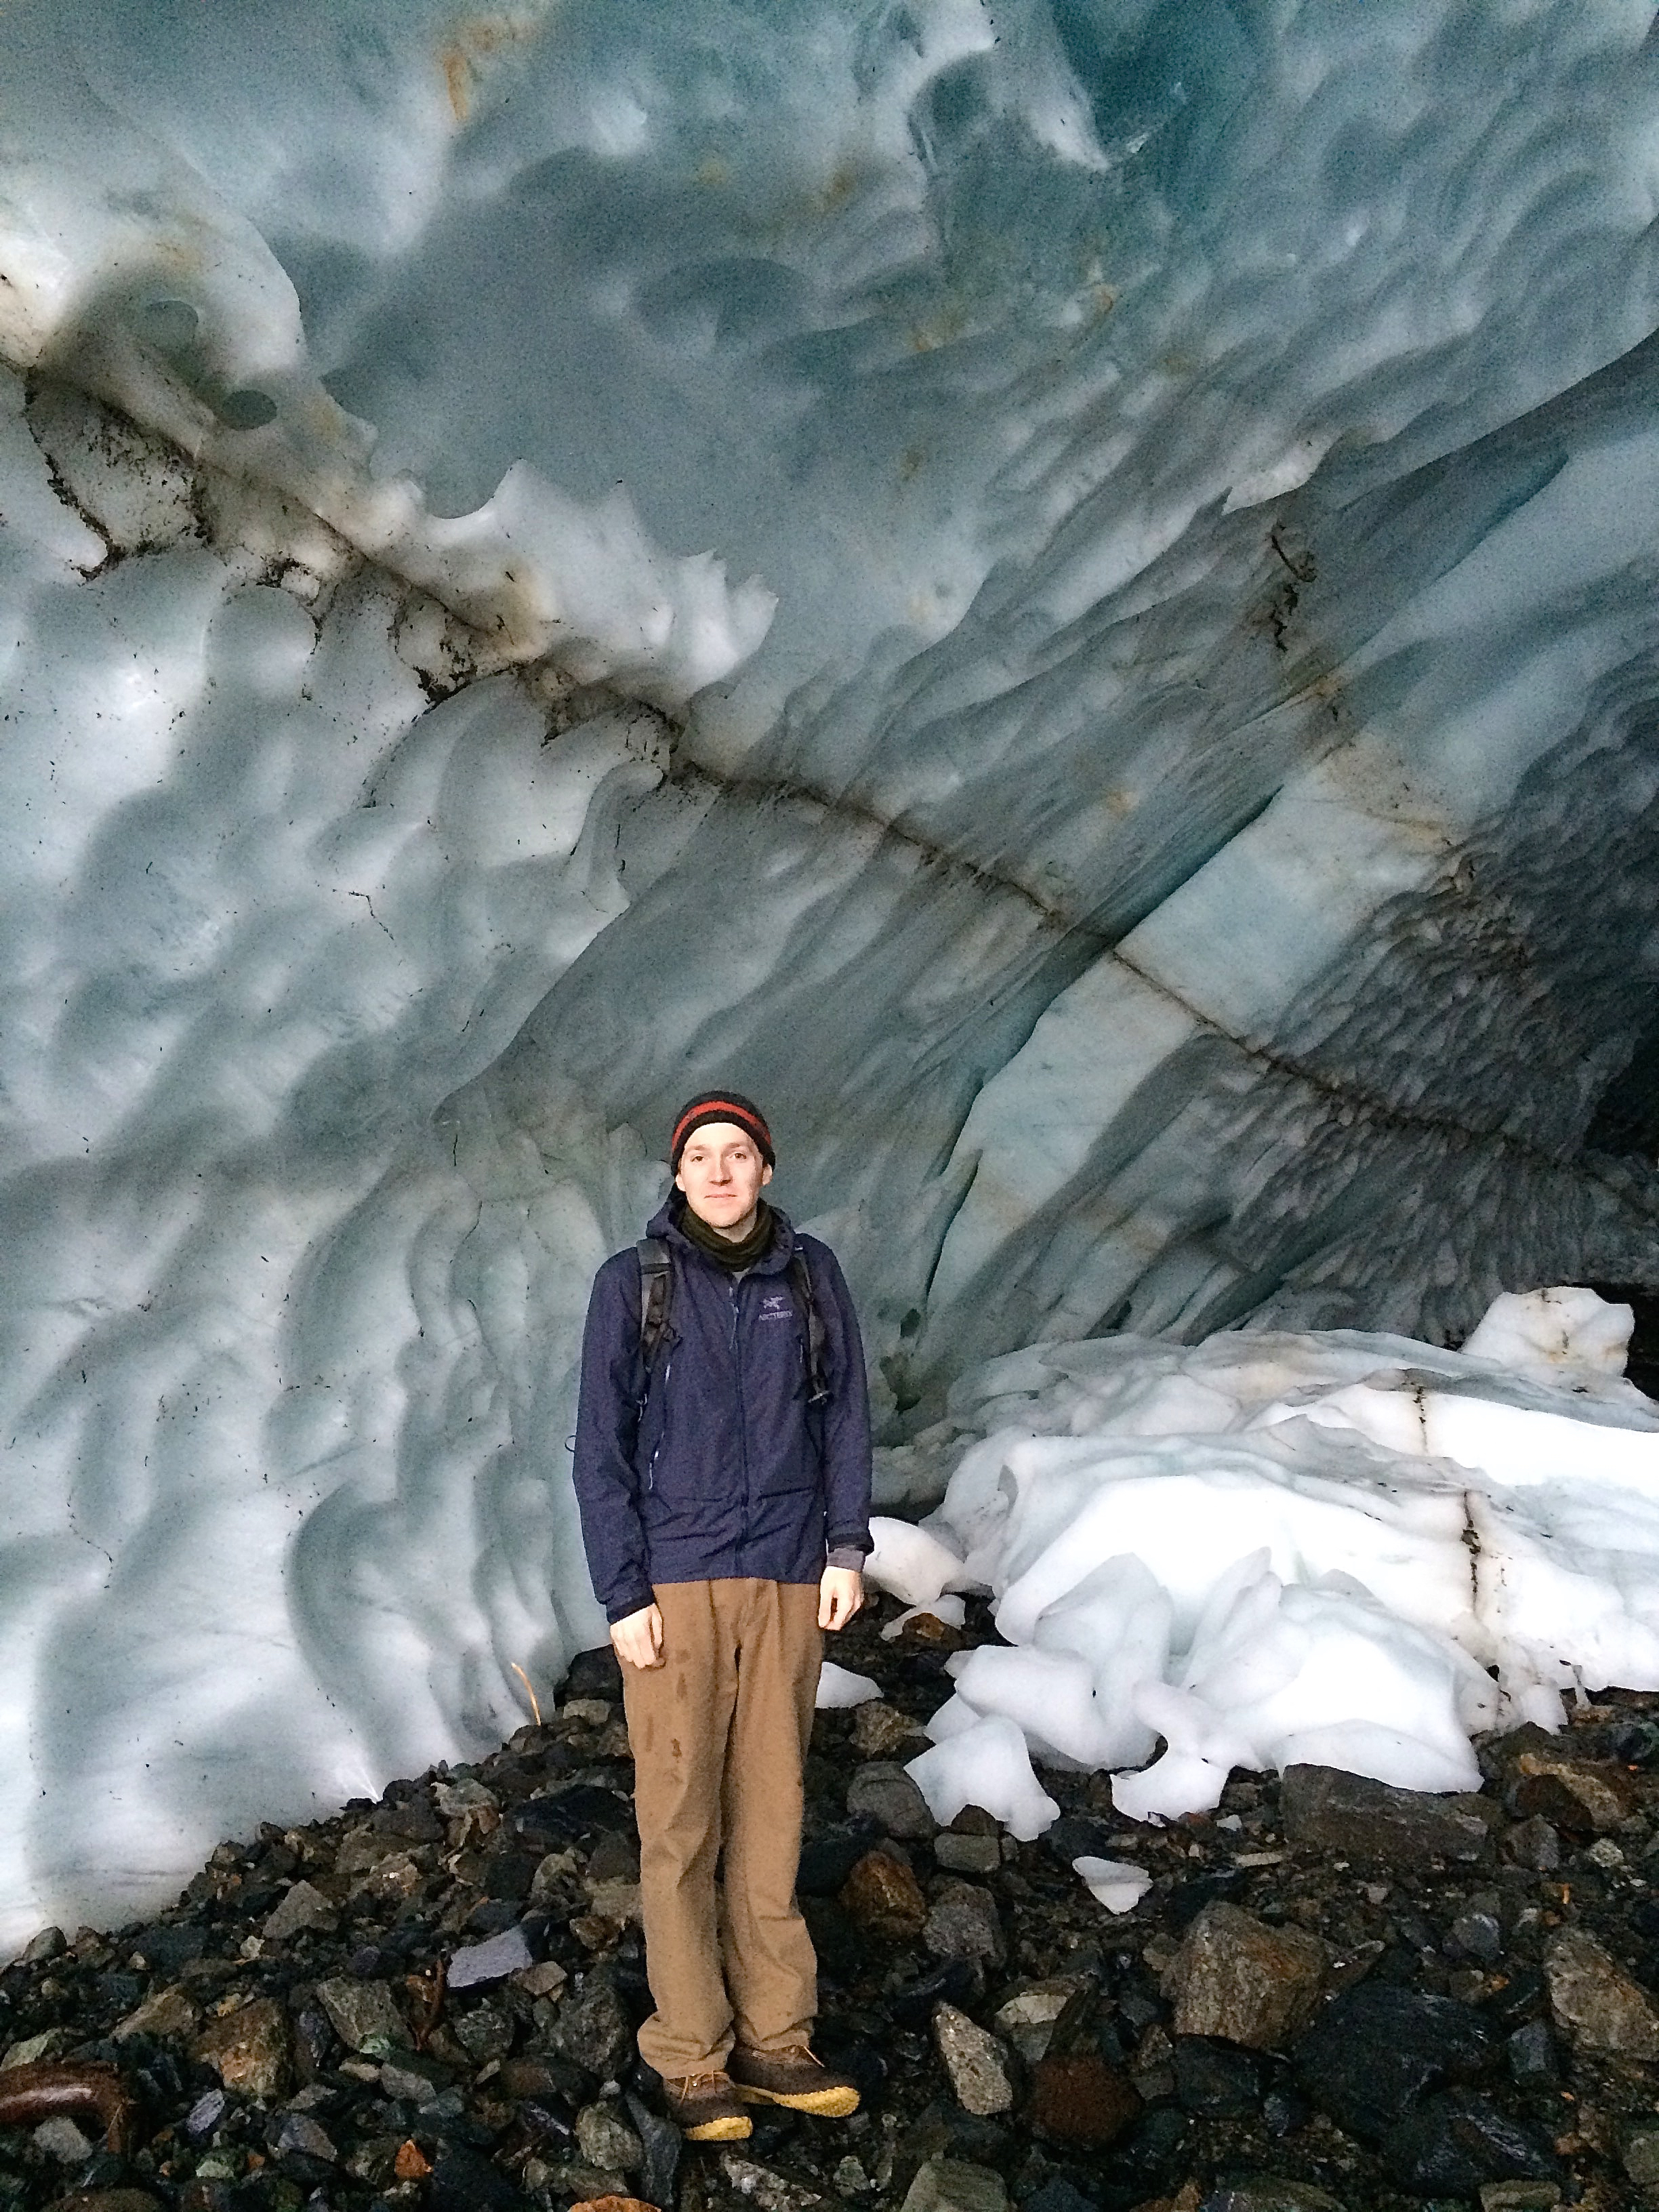 Me at the glacier